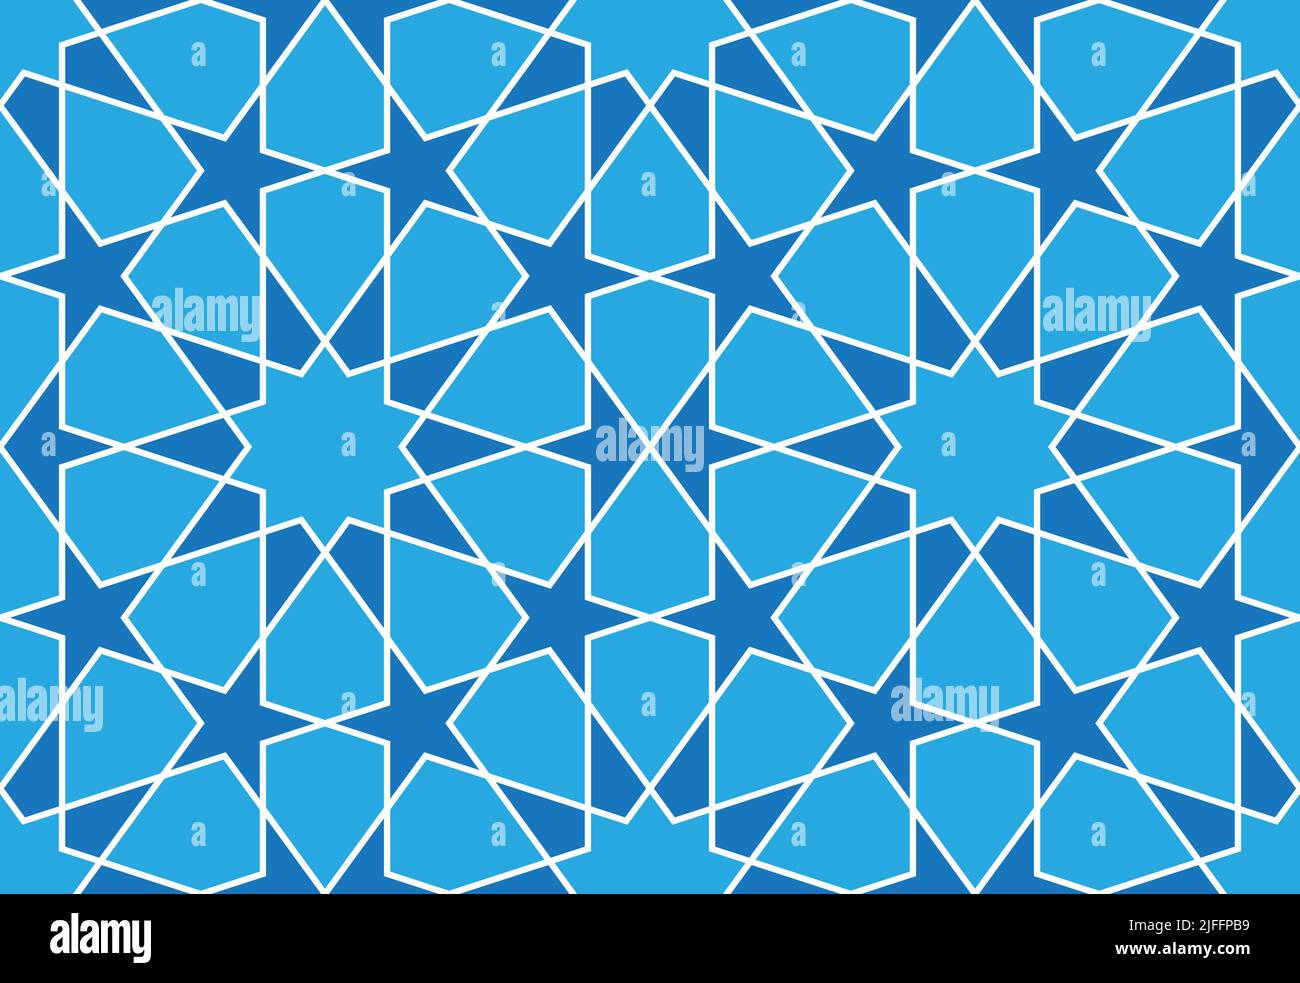 Arabic geometric seamless pattern. Vector illustration. Stock Vector